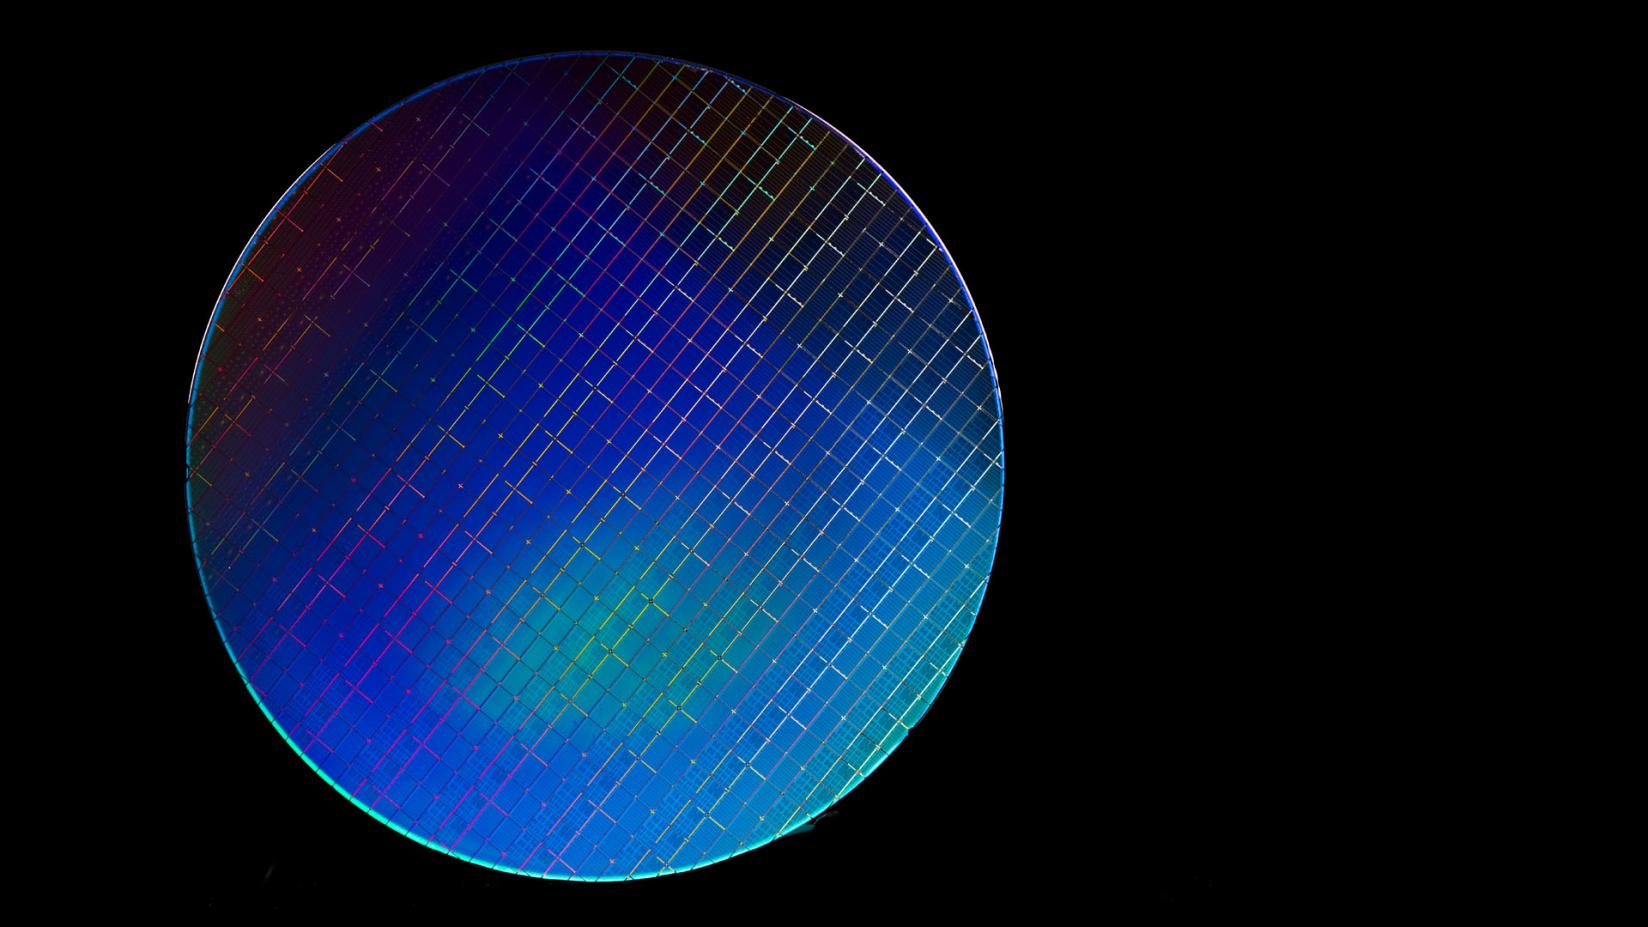 newsroom-spin-qubit-2.jpg.rendition.intel.web.1648.927.jpg